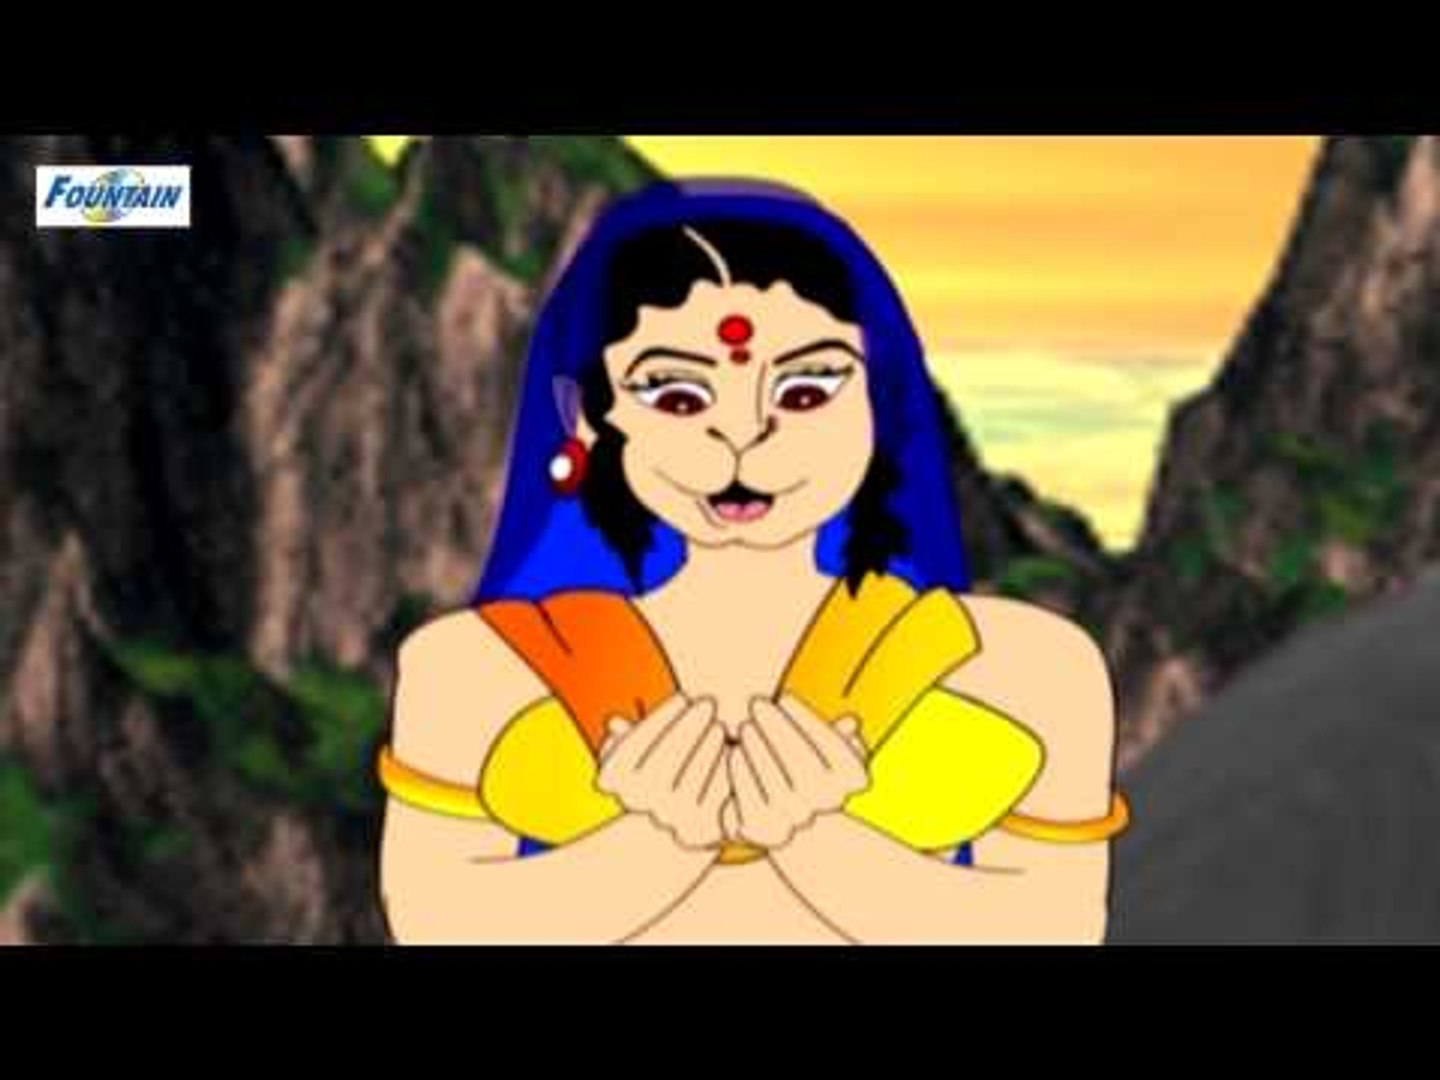 Ramayan - Full Animated Movie - Gujarati - video Dailymotion